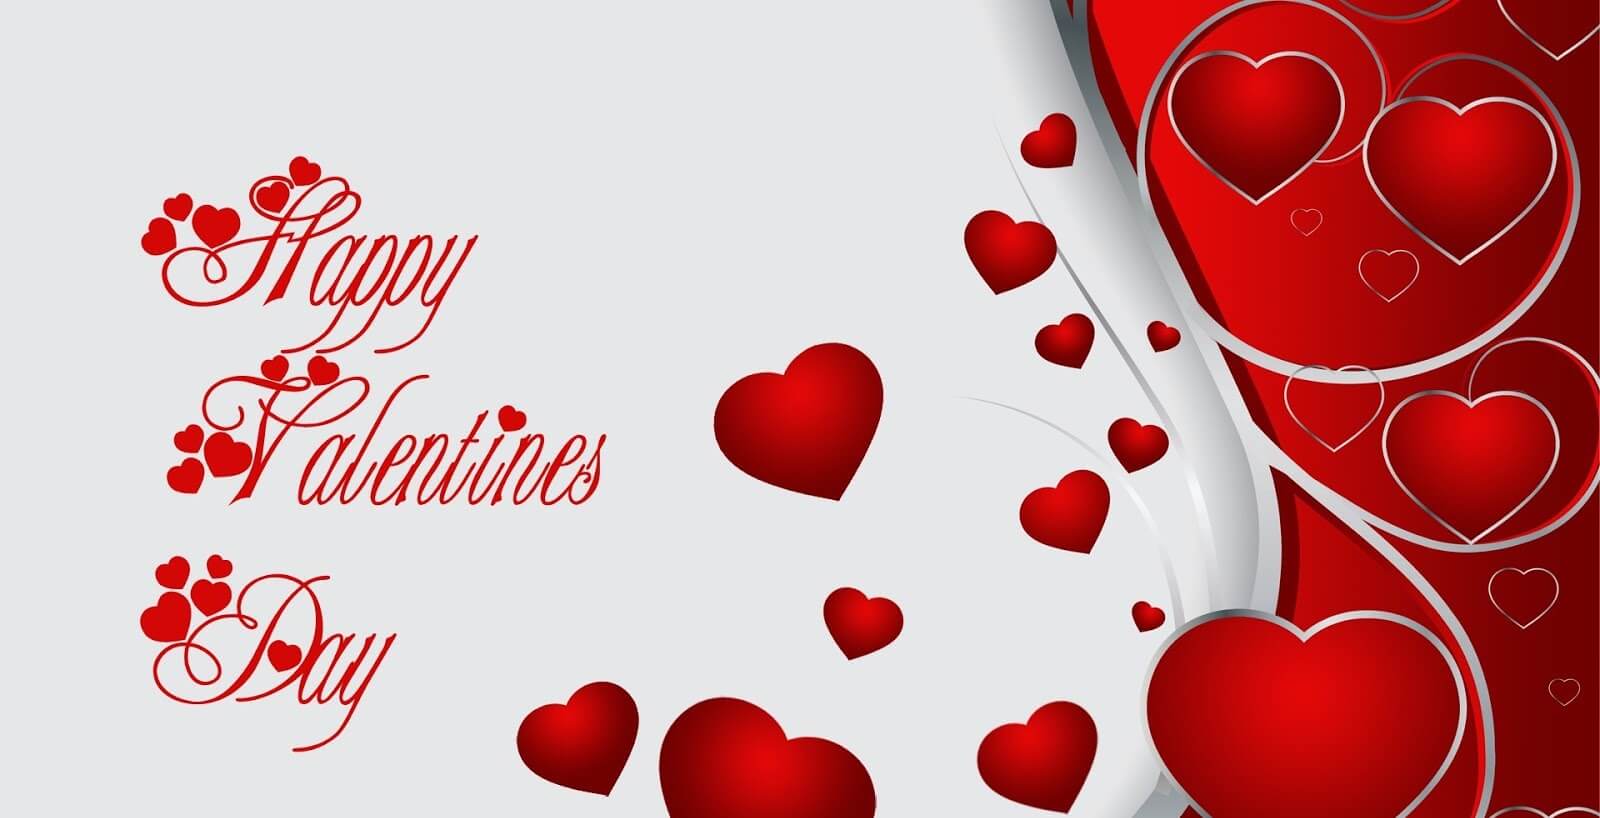 happy valentines day wishes